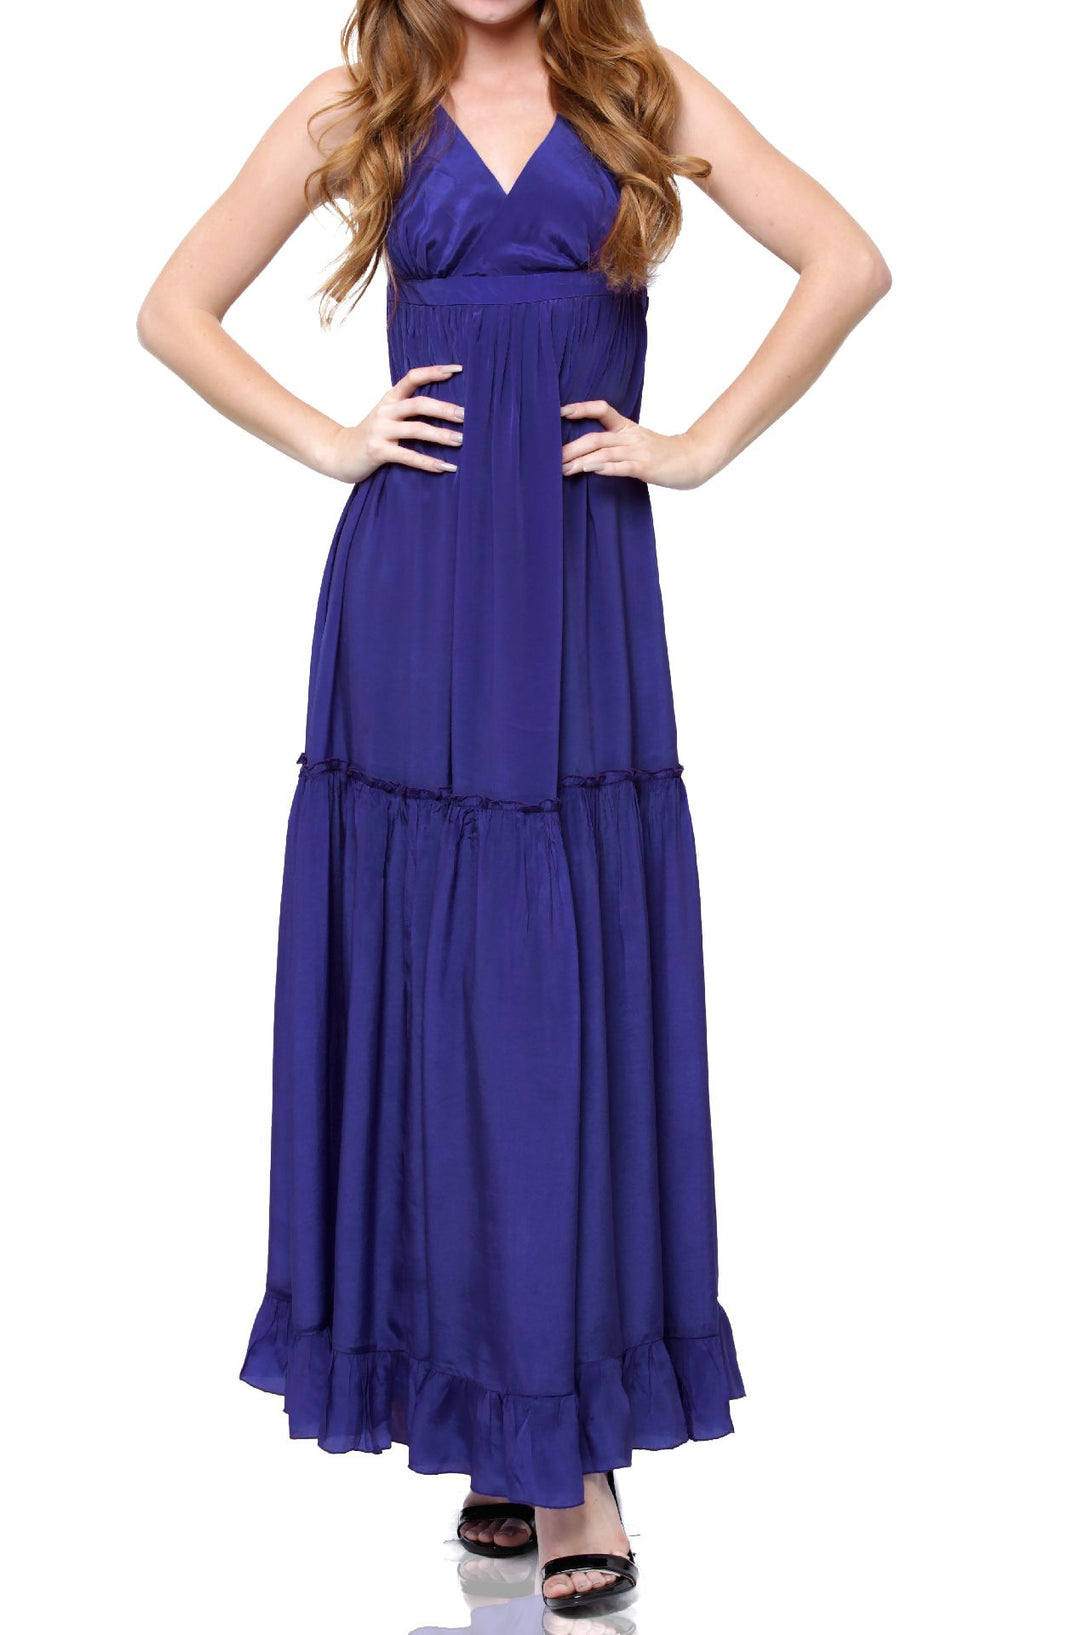  navy blue long dress, long summer dresses for women, plunge neck cocktail dress,